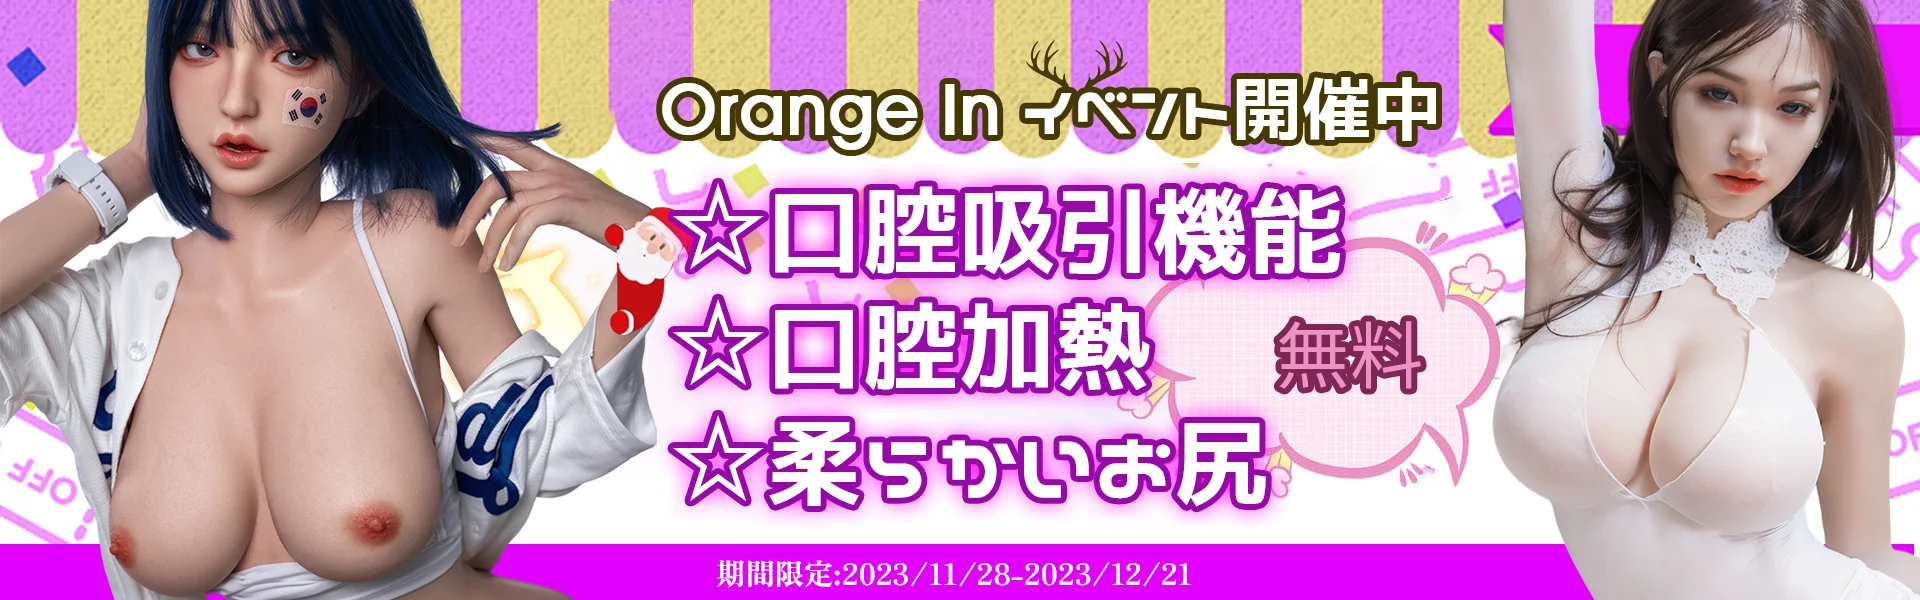 Orange In 12月キャンペーン